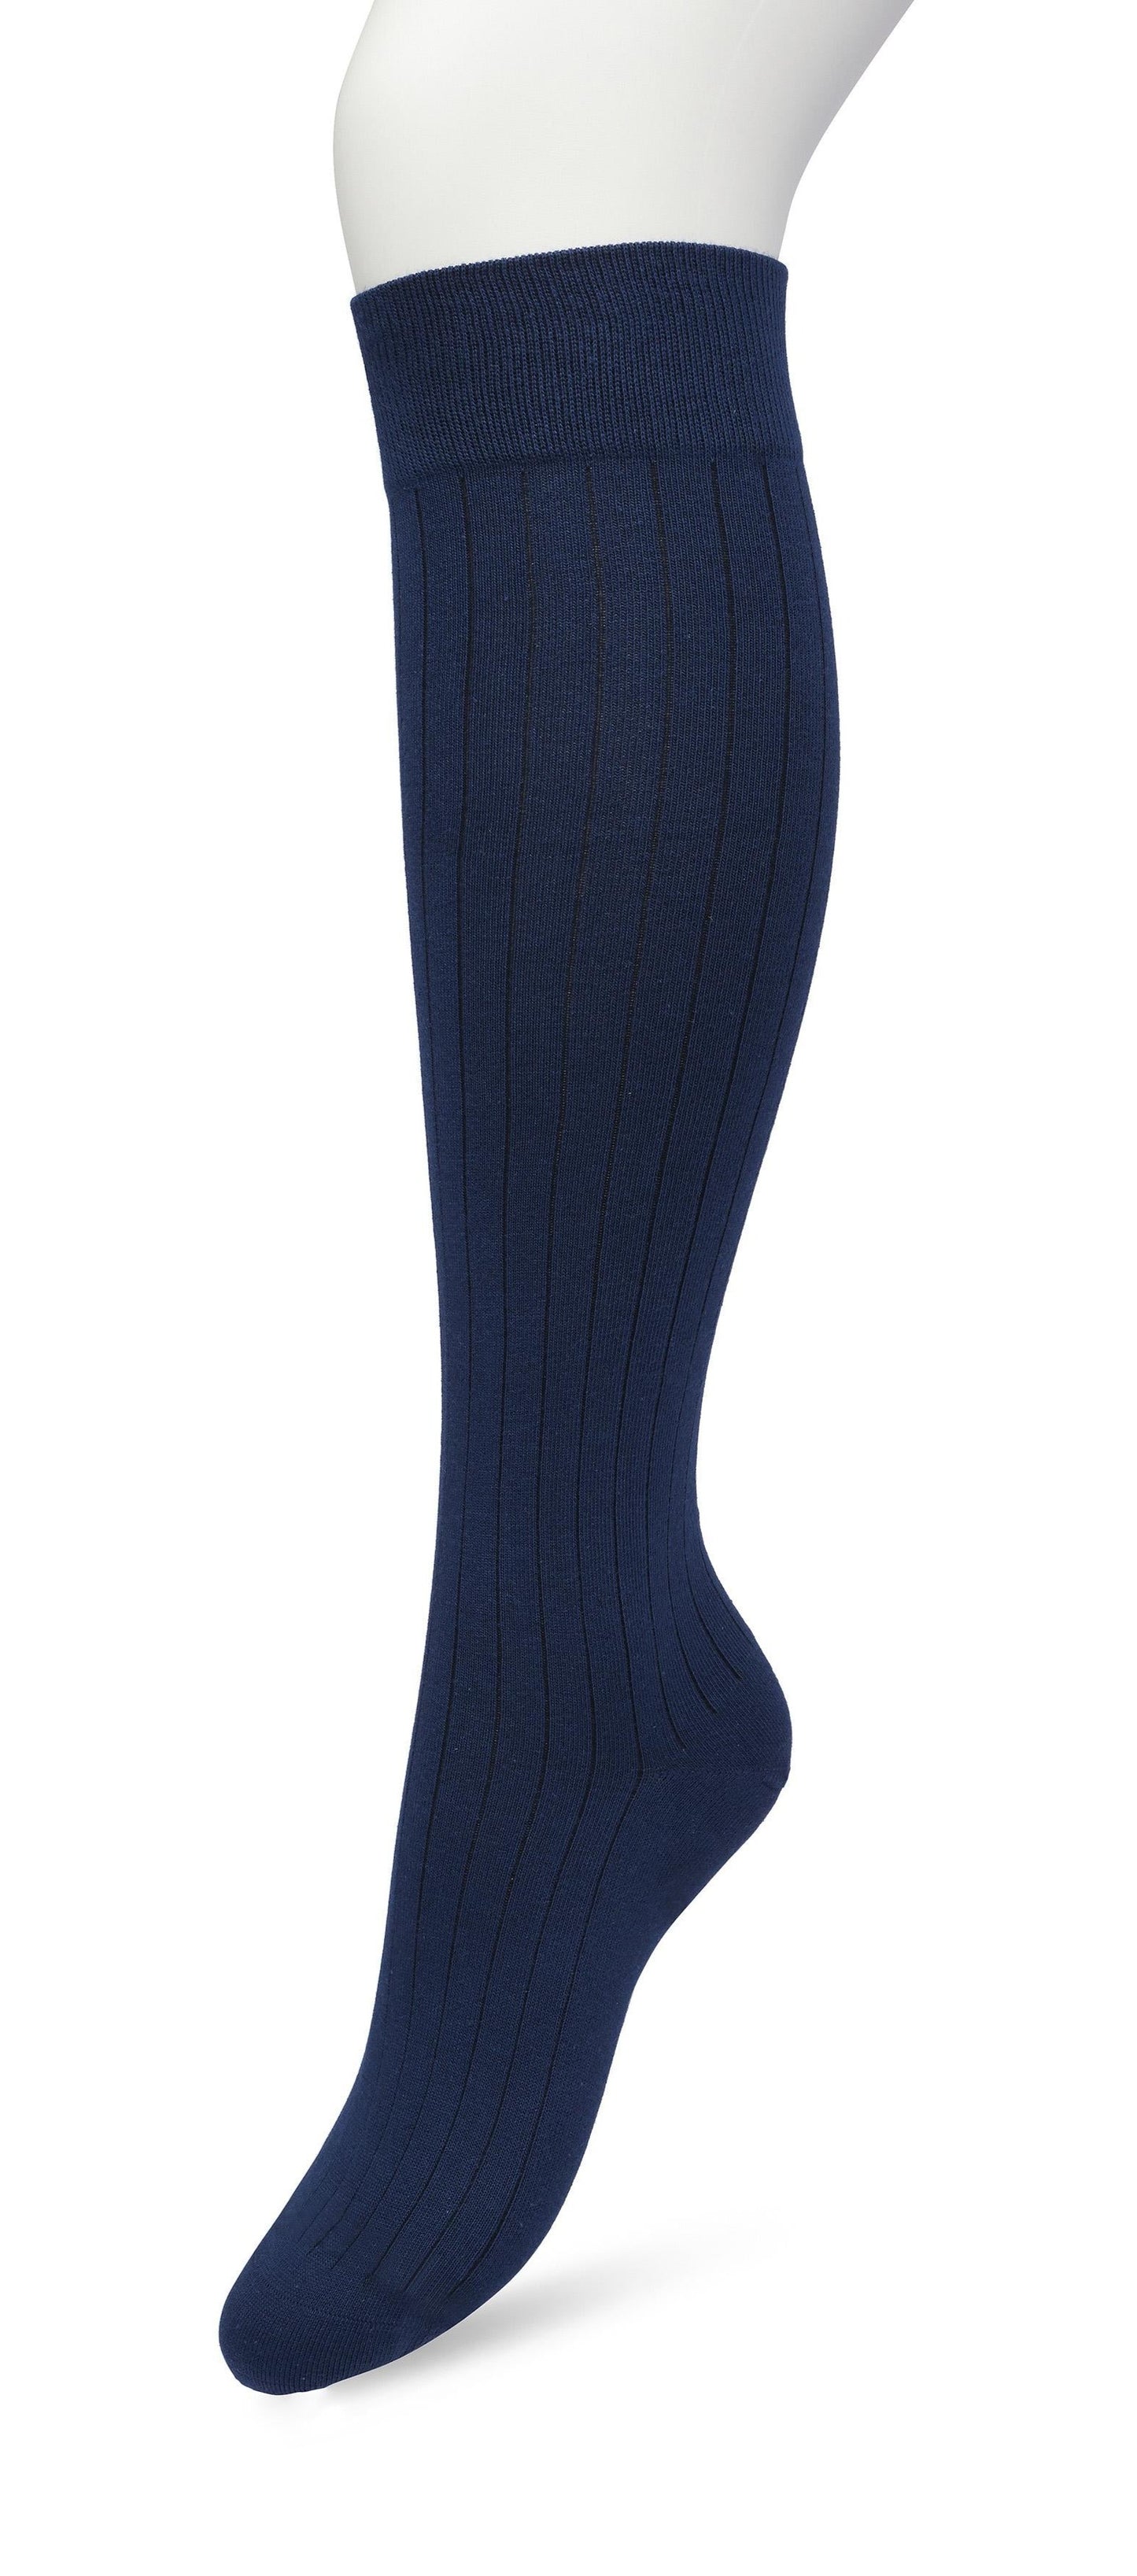 Bonnie Doon Rib Knee High Sock - Navy Blue (Insignia) knitted rib knee-high sock with shaped heel, flat toe seam and deep elasticated cuff.